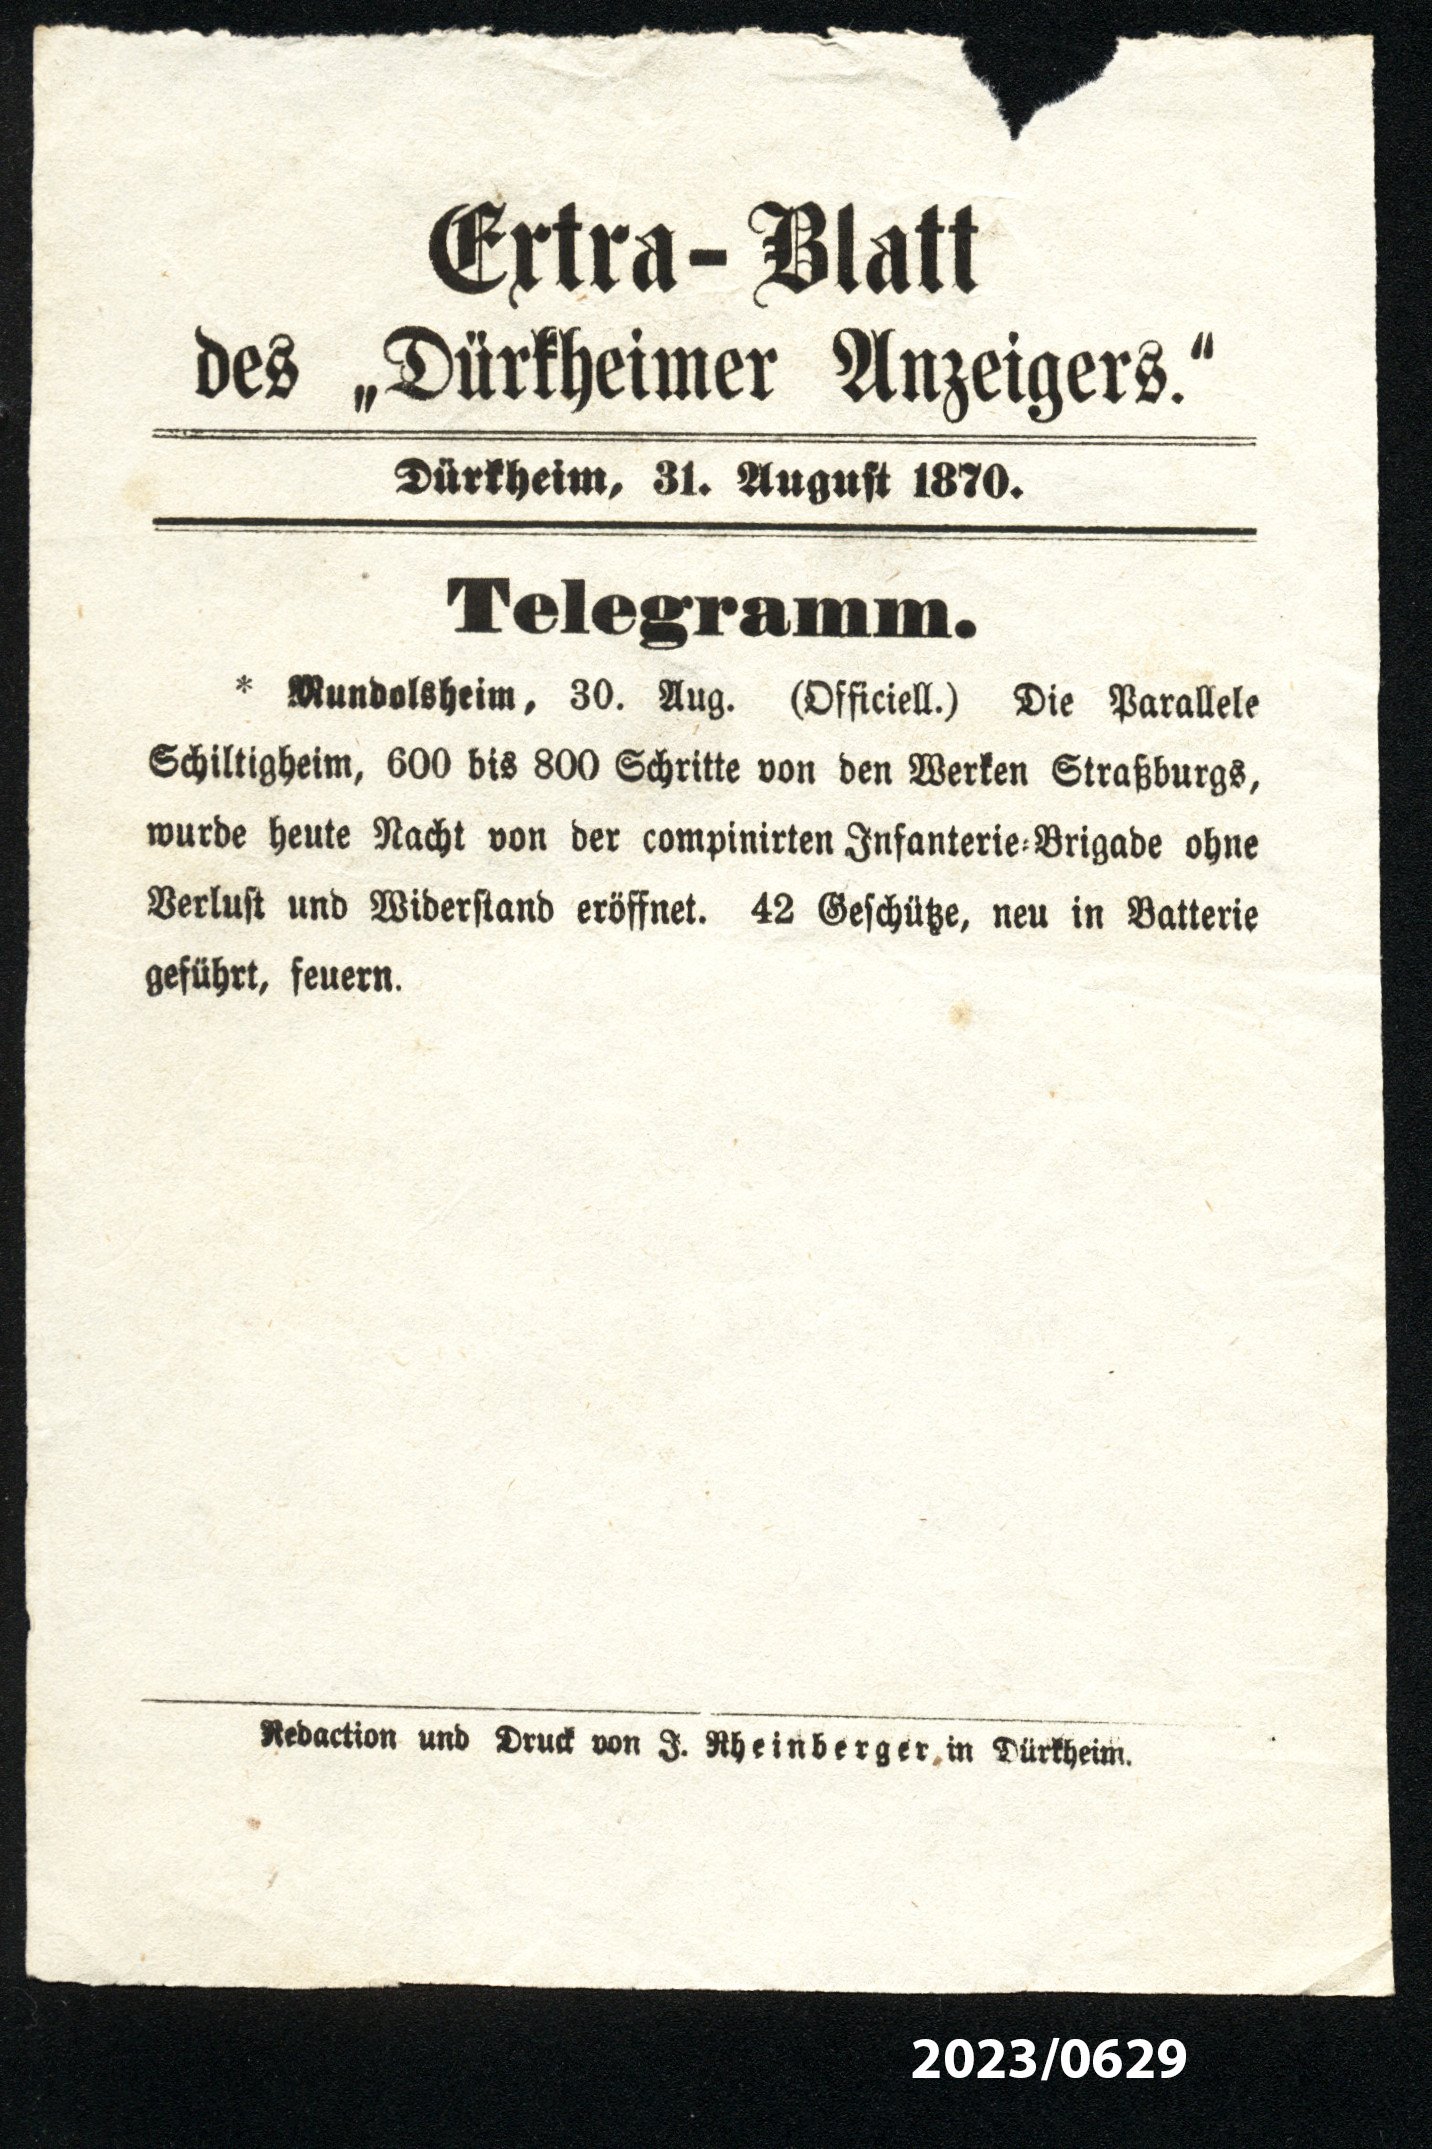 Extra-Blatt des "Dürkheimer Anzeigers" 31.8.1870 (Stadtmuseum Bad Dürkheim im Kulturzentrum Haus Catoir CC BY-NC-SA)